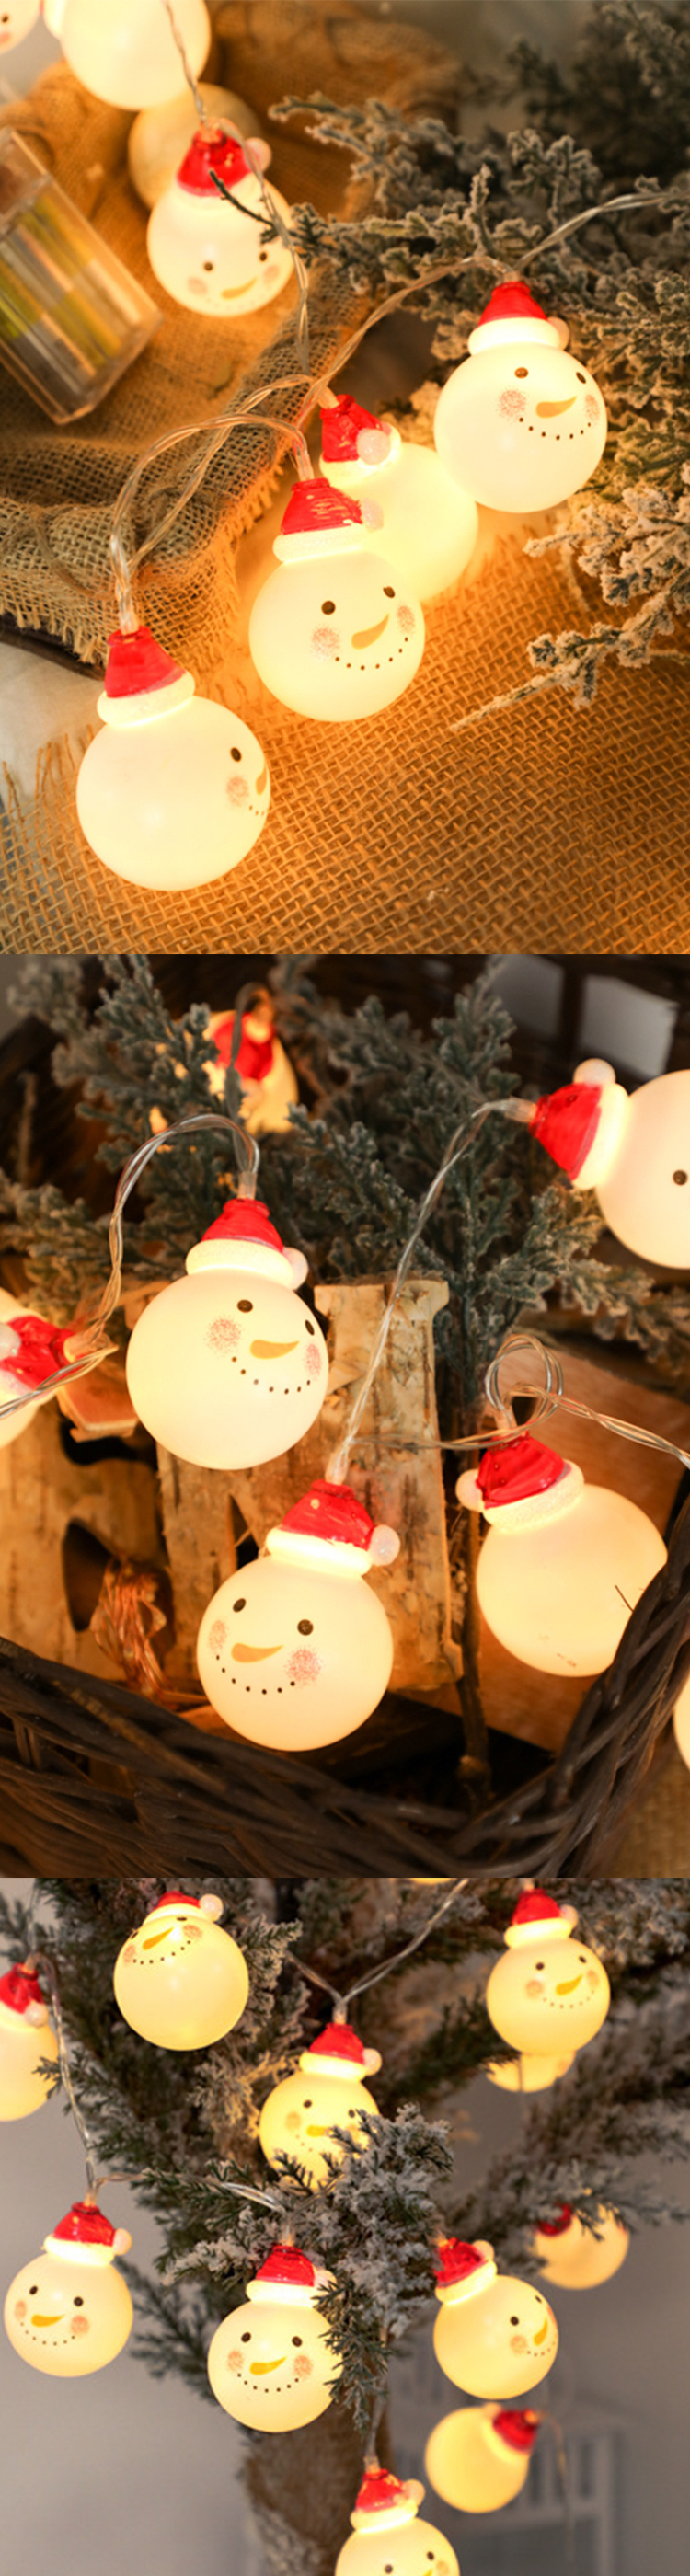 1M-3M snowman led fairy string lights santa led Christmas light home garden indoor party wedding Christmas decoration light